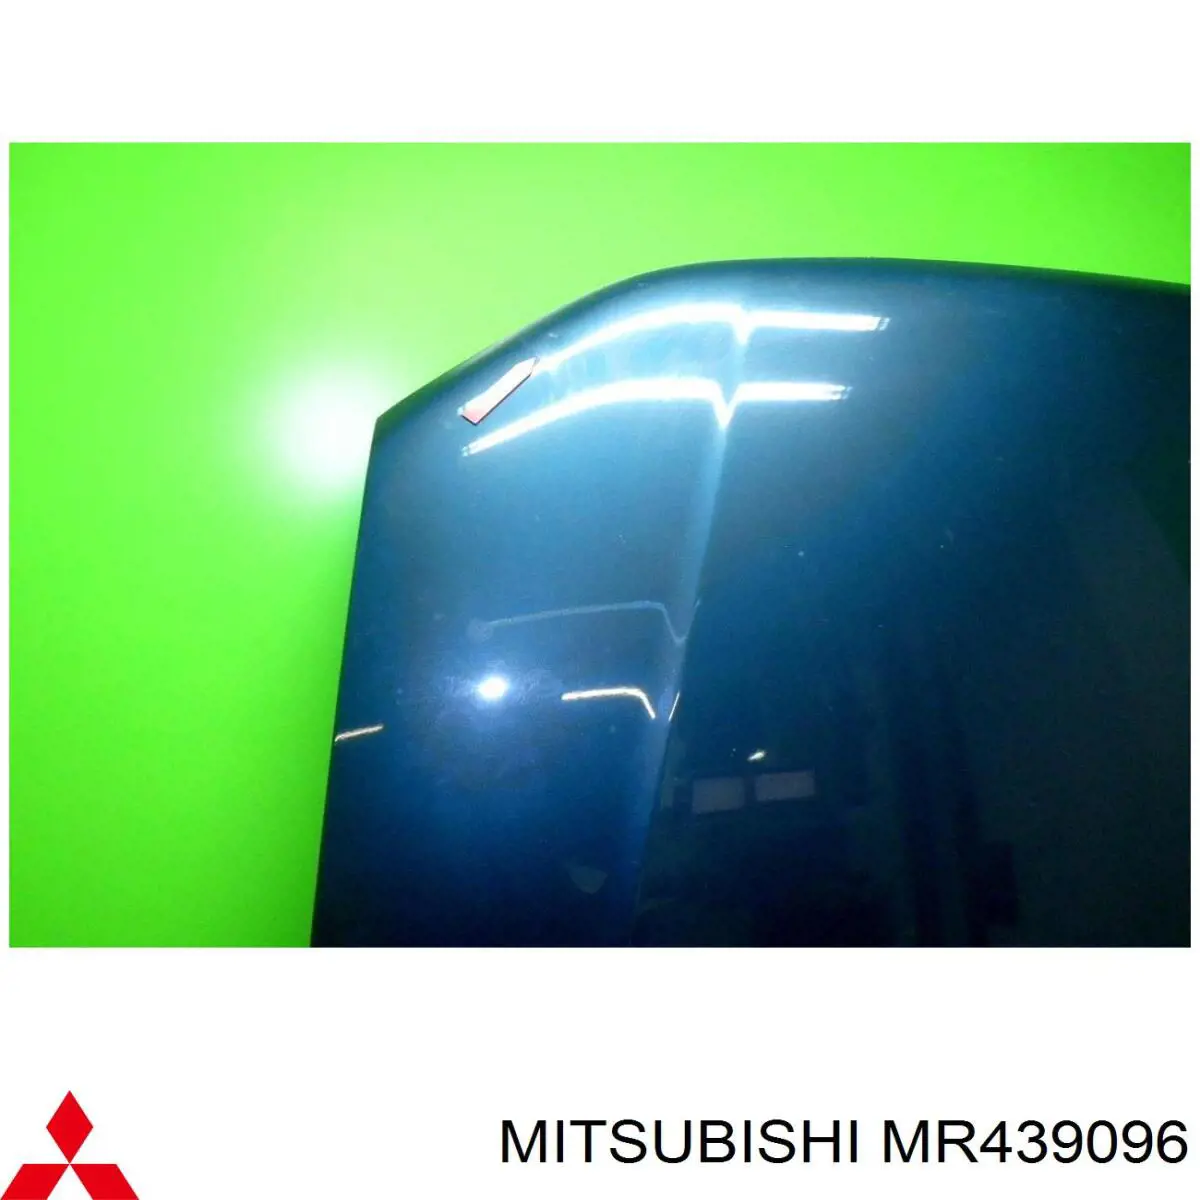 MR439096 Mitsubishi capó